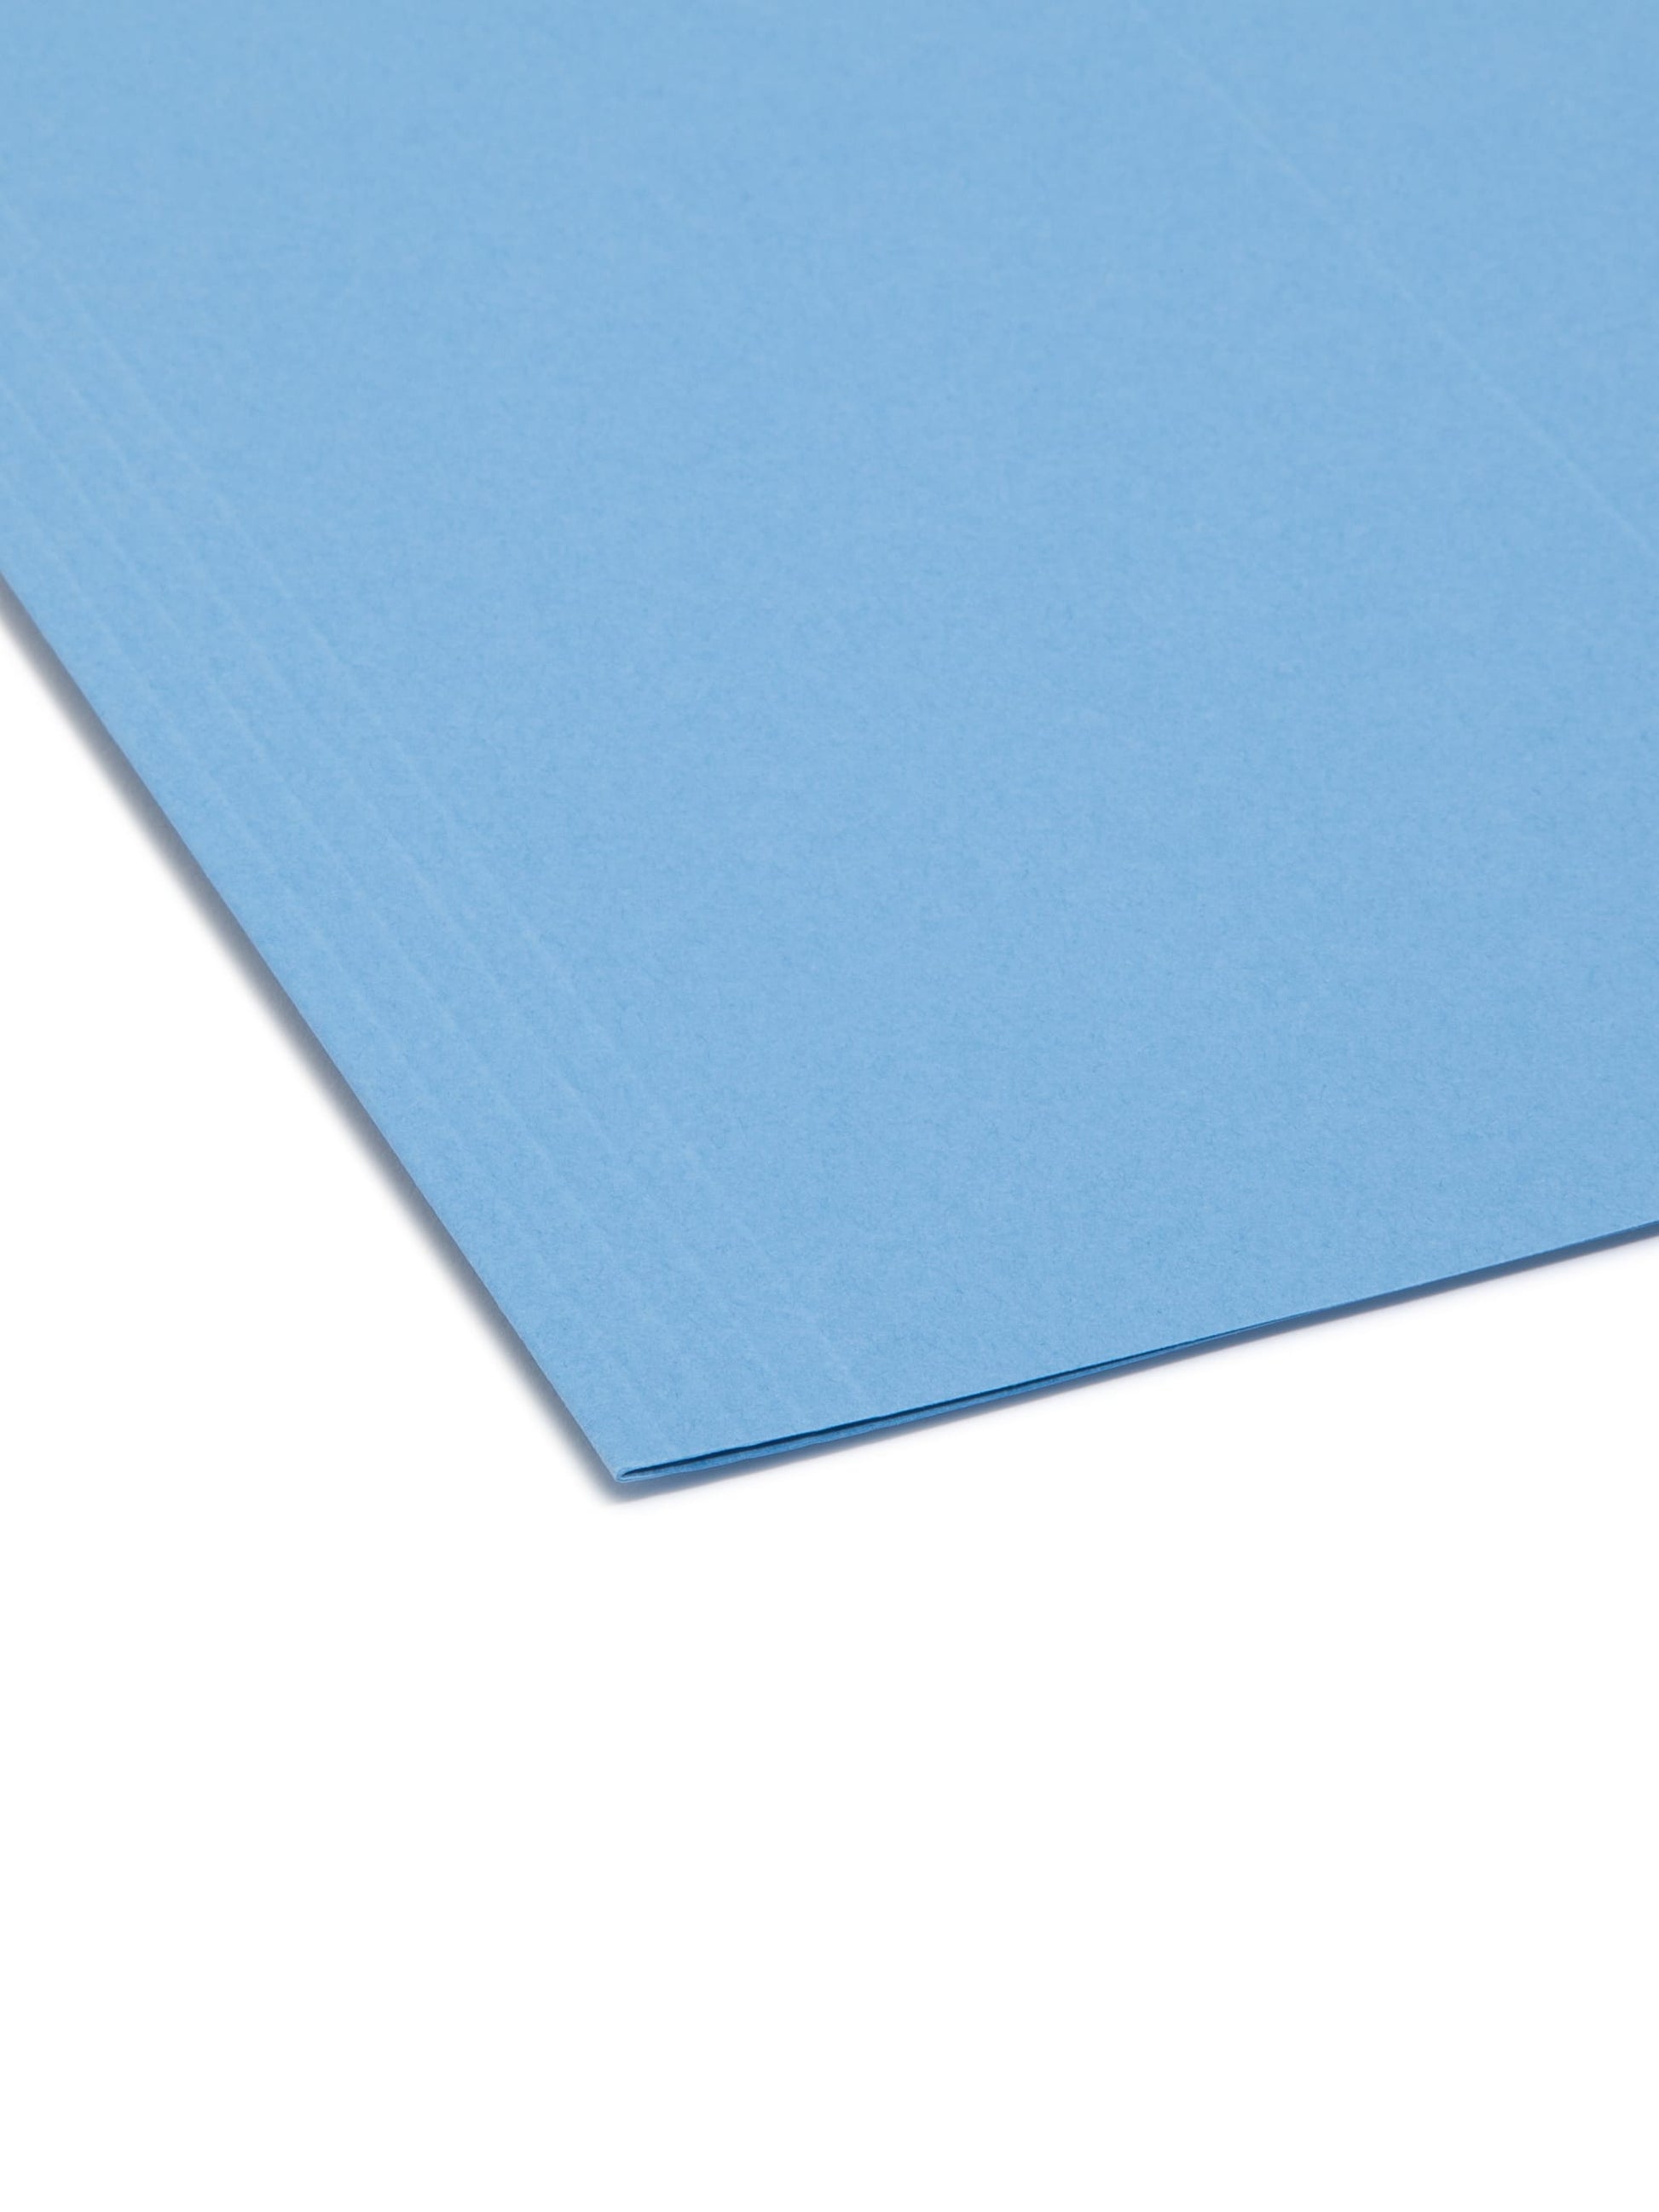 Standard Hanging File Folders with 1/3-Cut Tabs, Blue Color, Letter Size, Set of 25, 086486640213